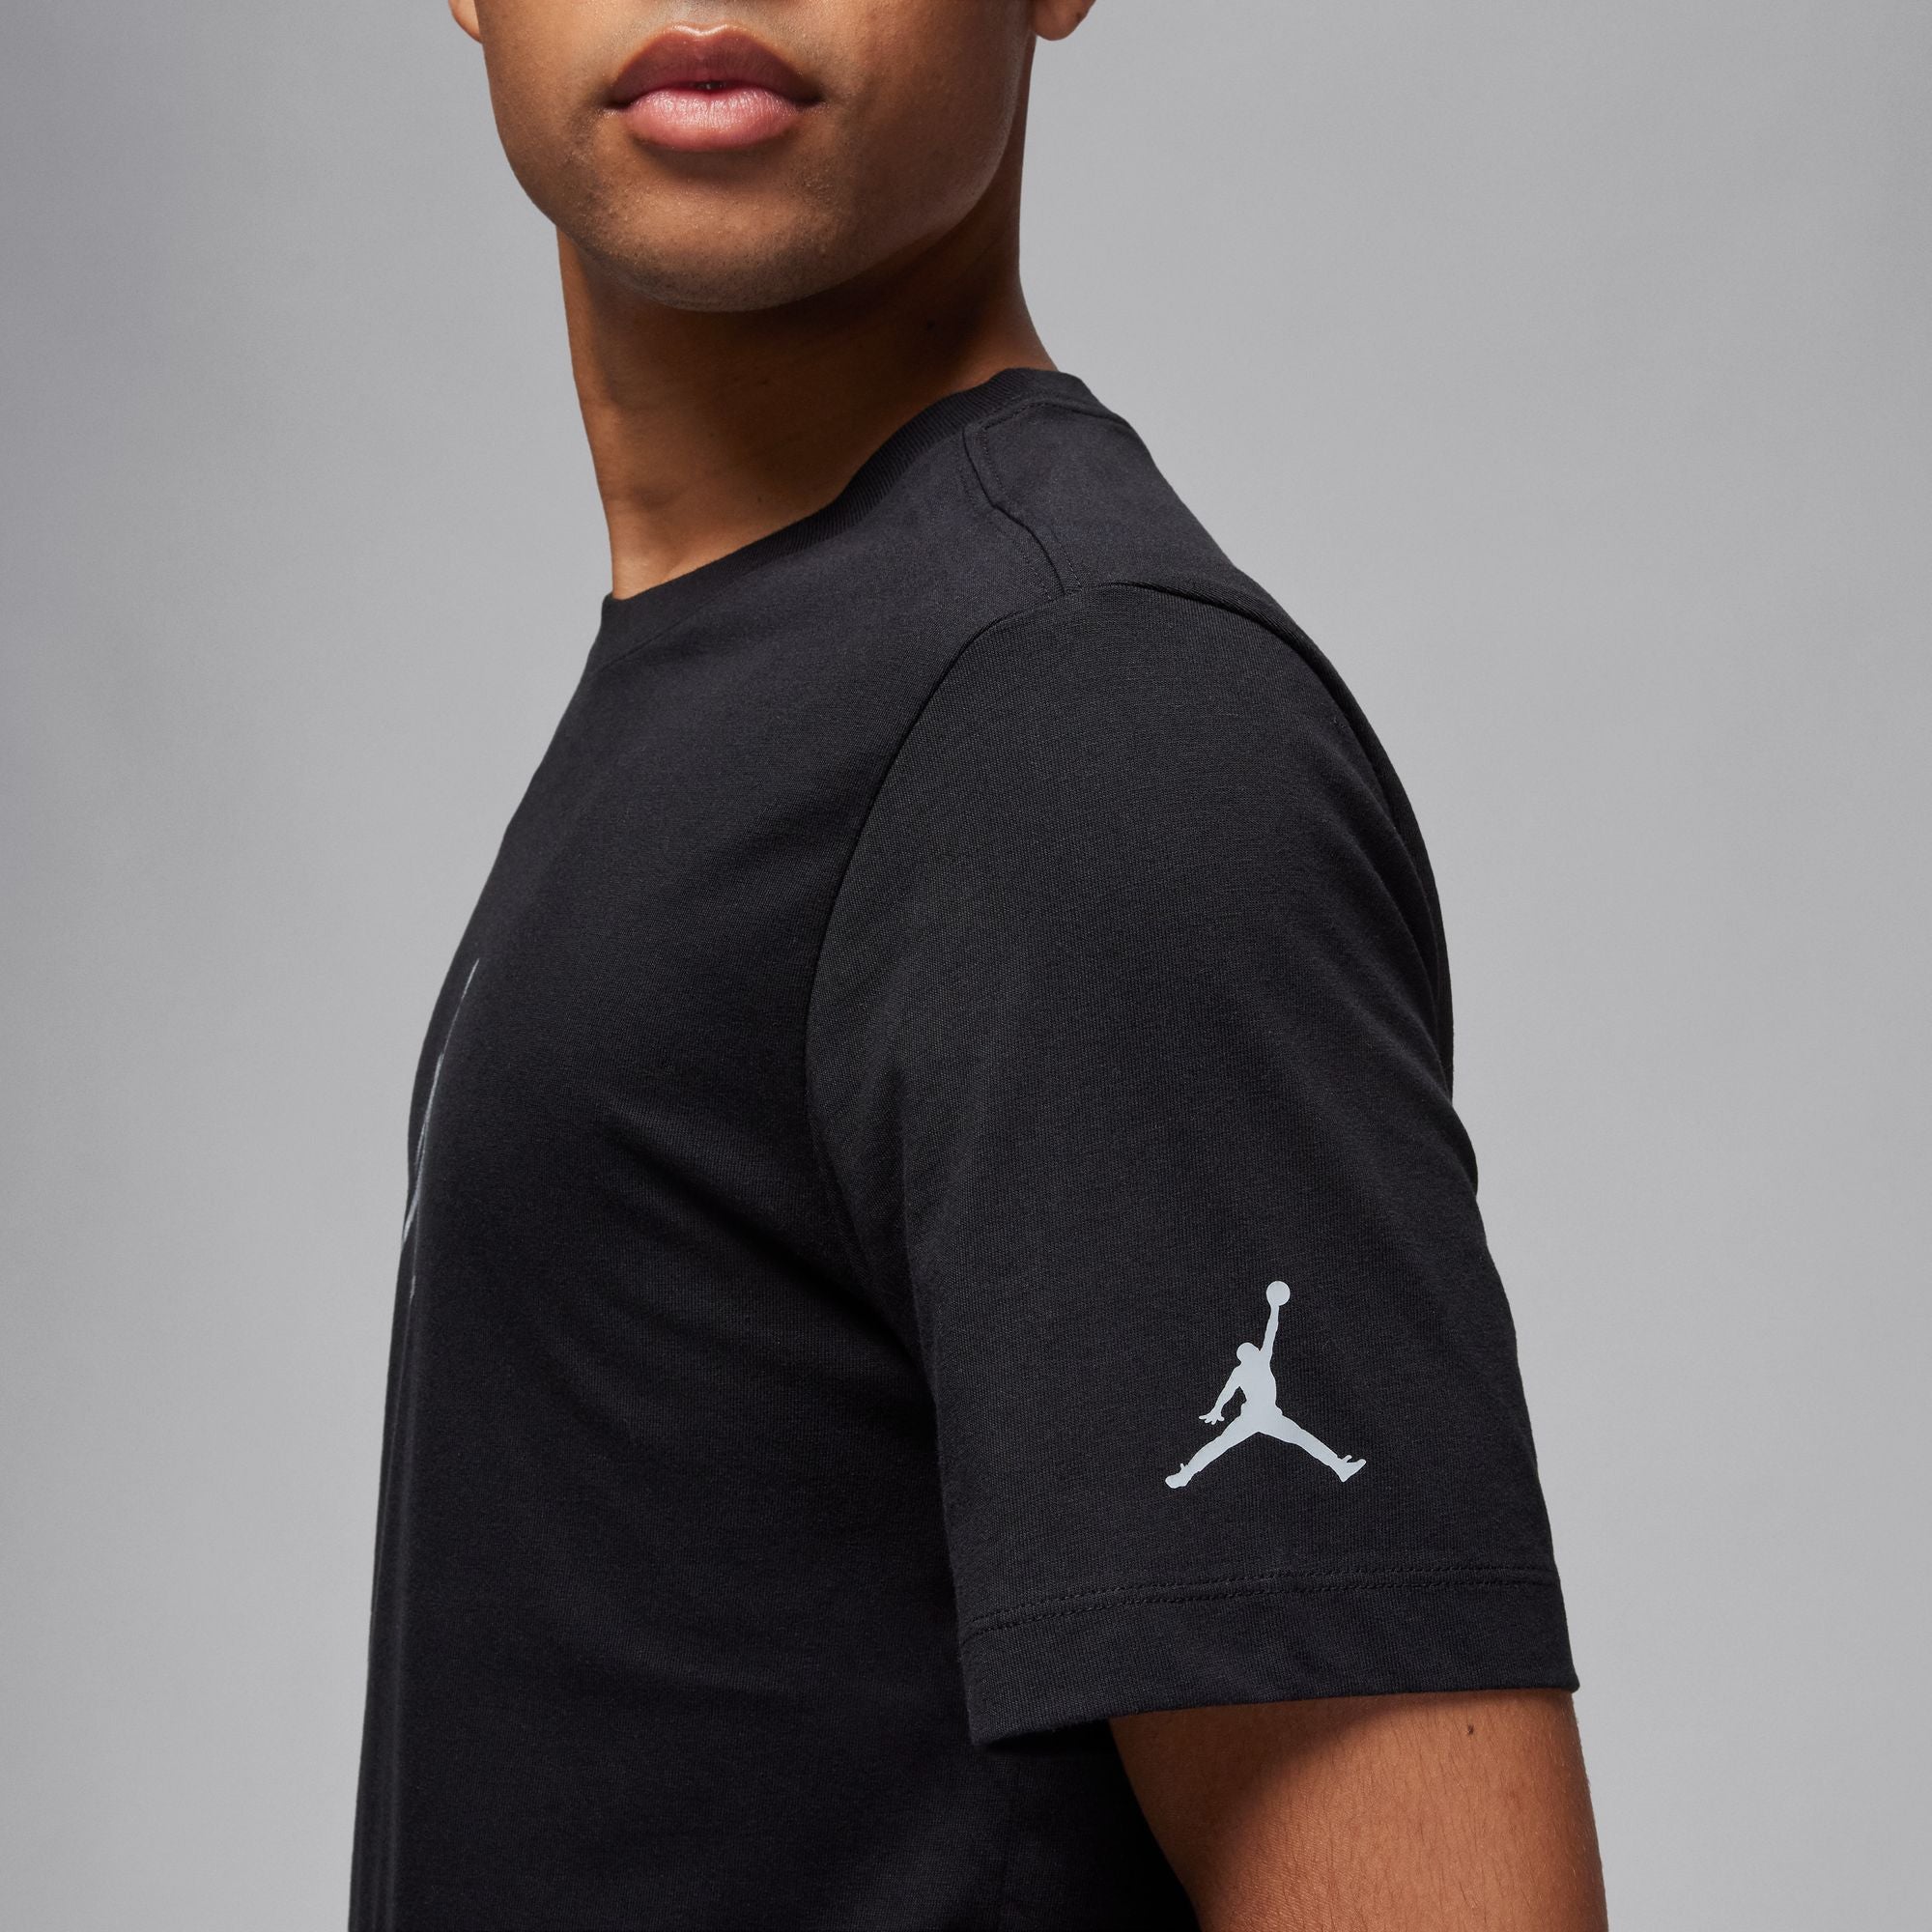 Nike Air Jordan Brand Chicago Graphic T-Shirt